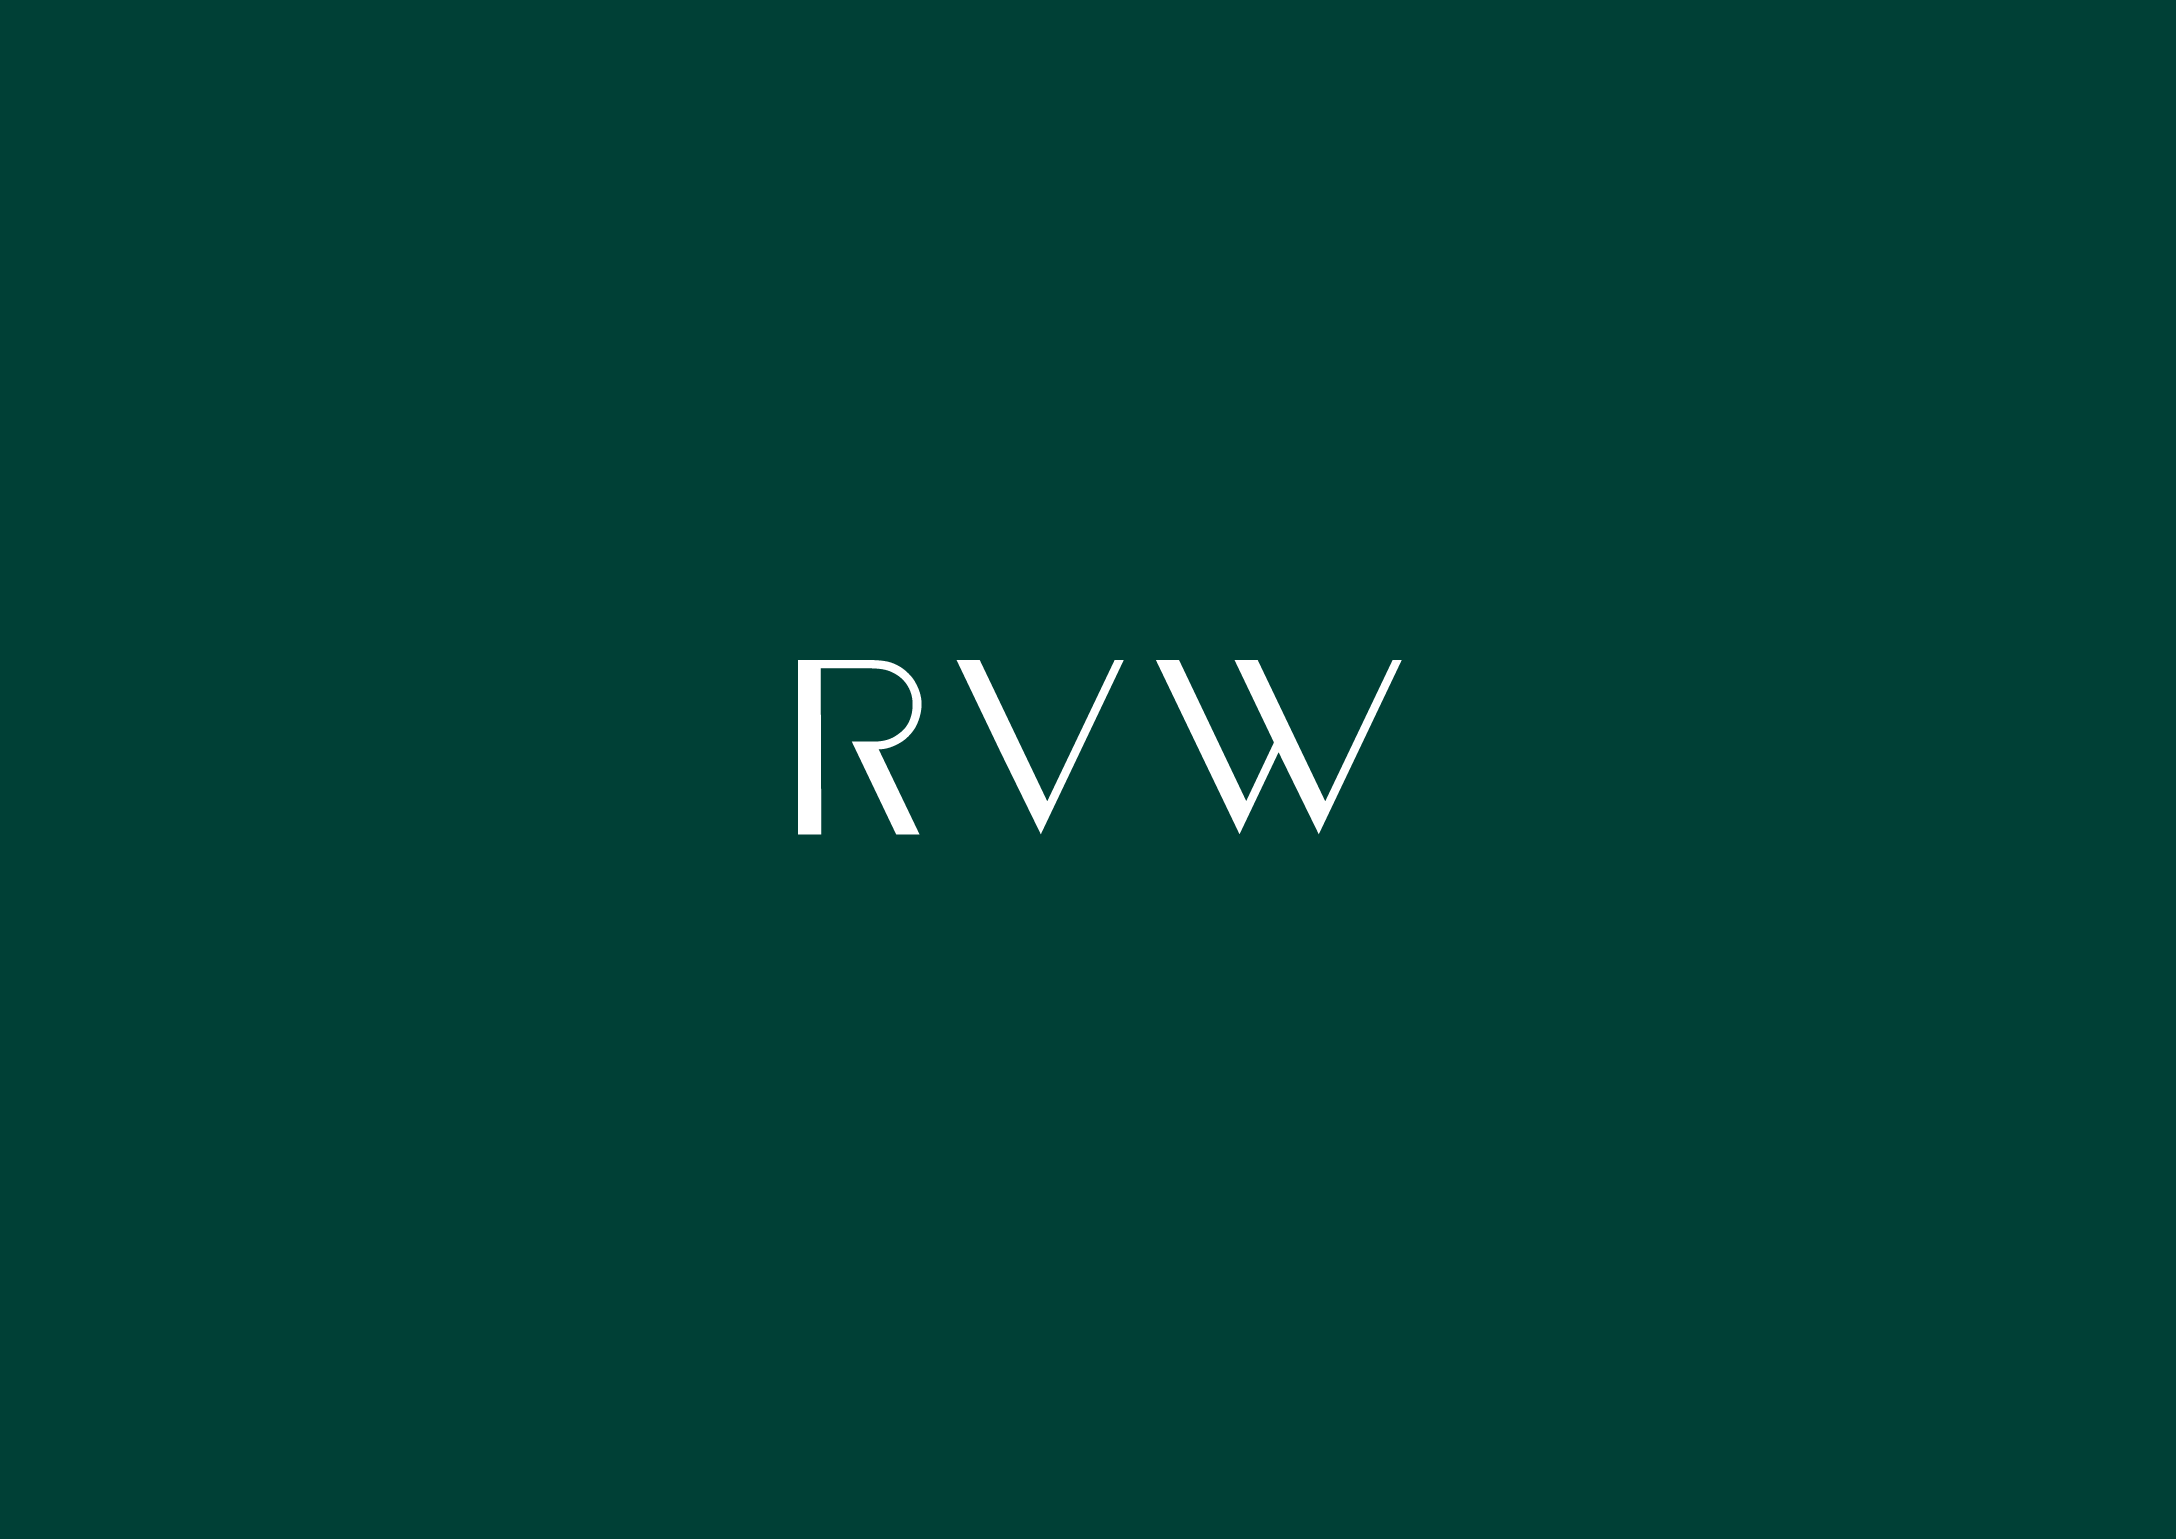 RVW_Glass